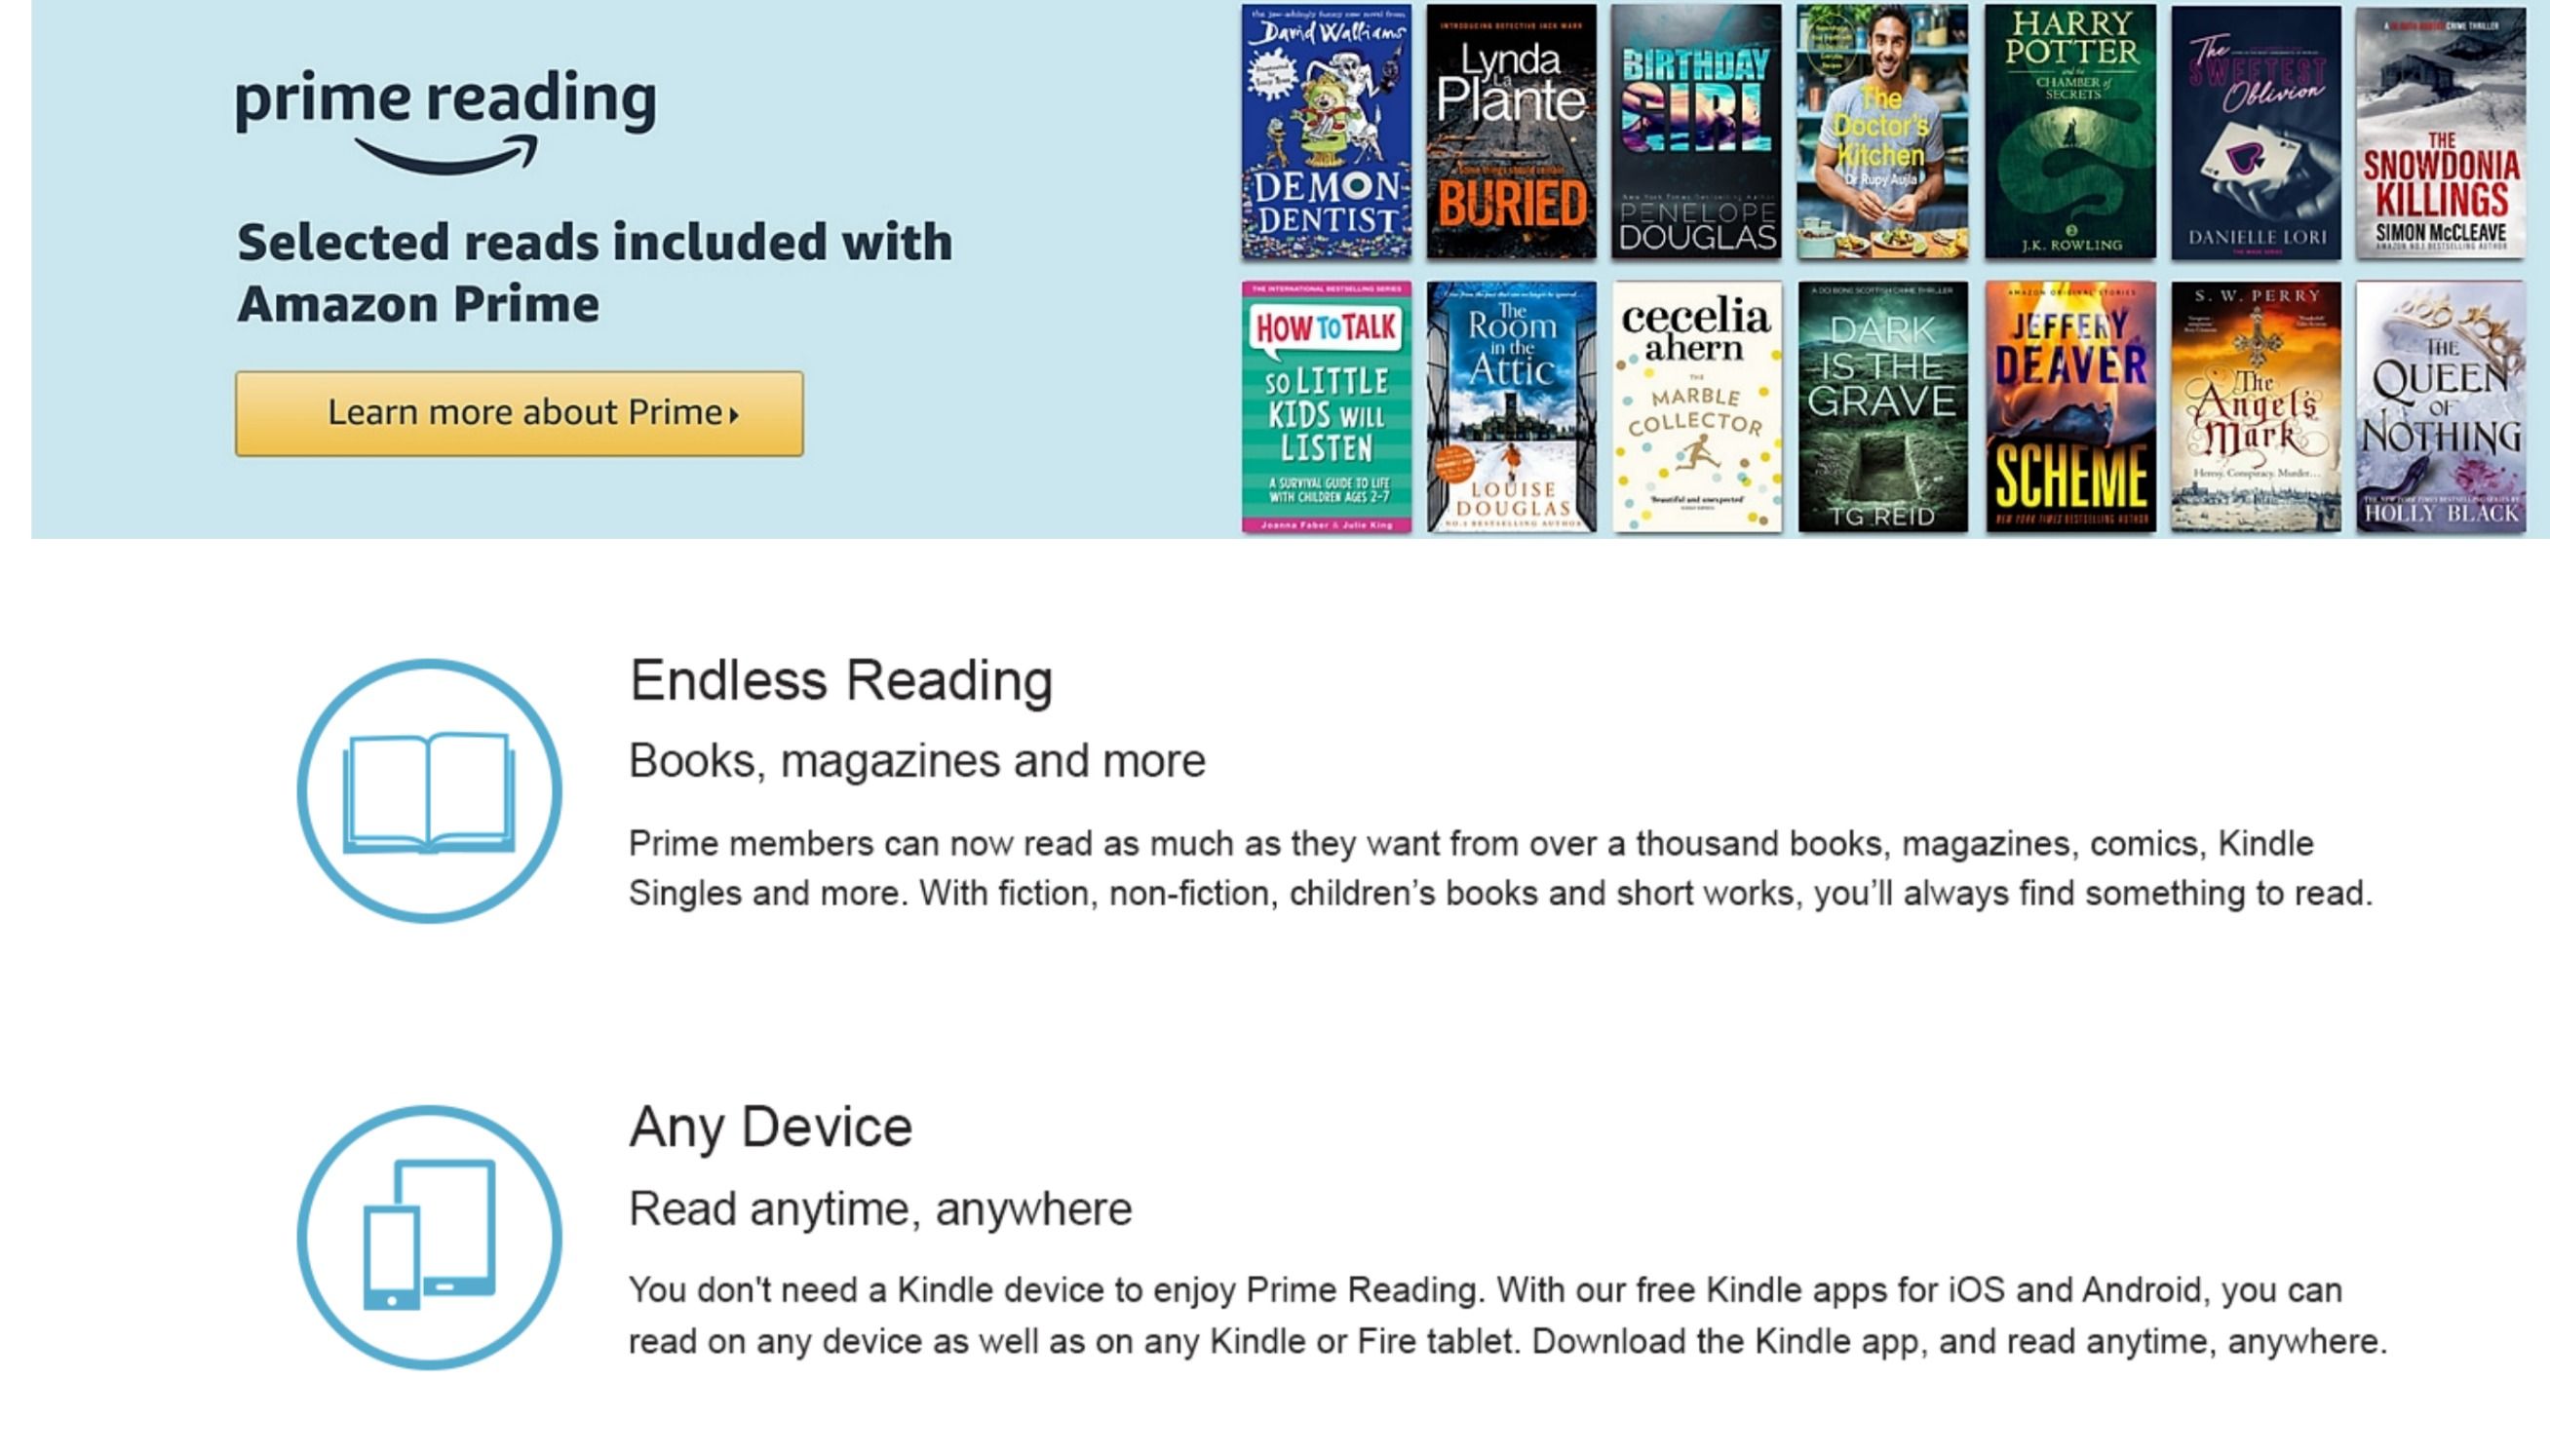 Prime reading homepage on Amazon